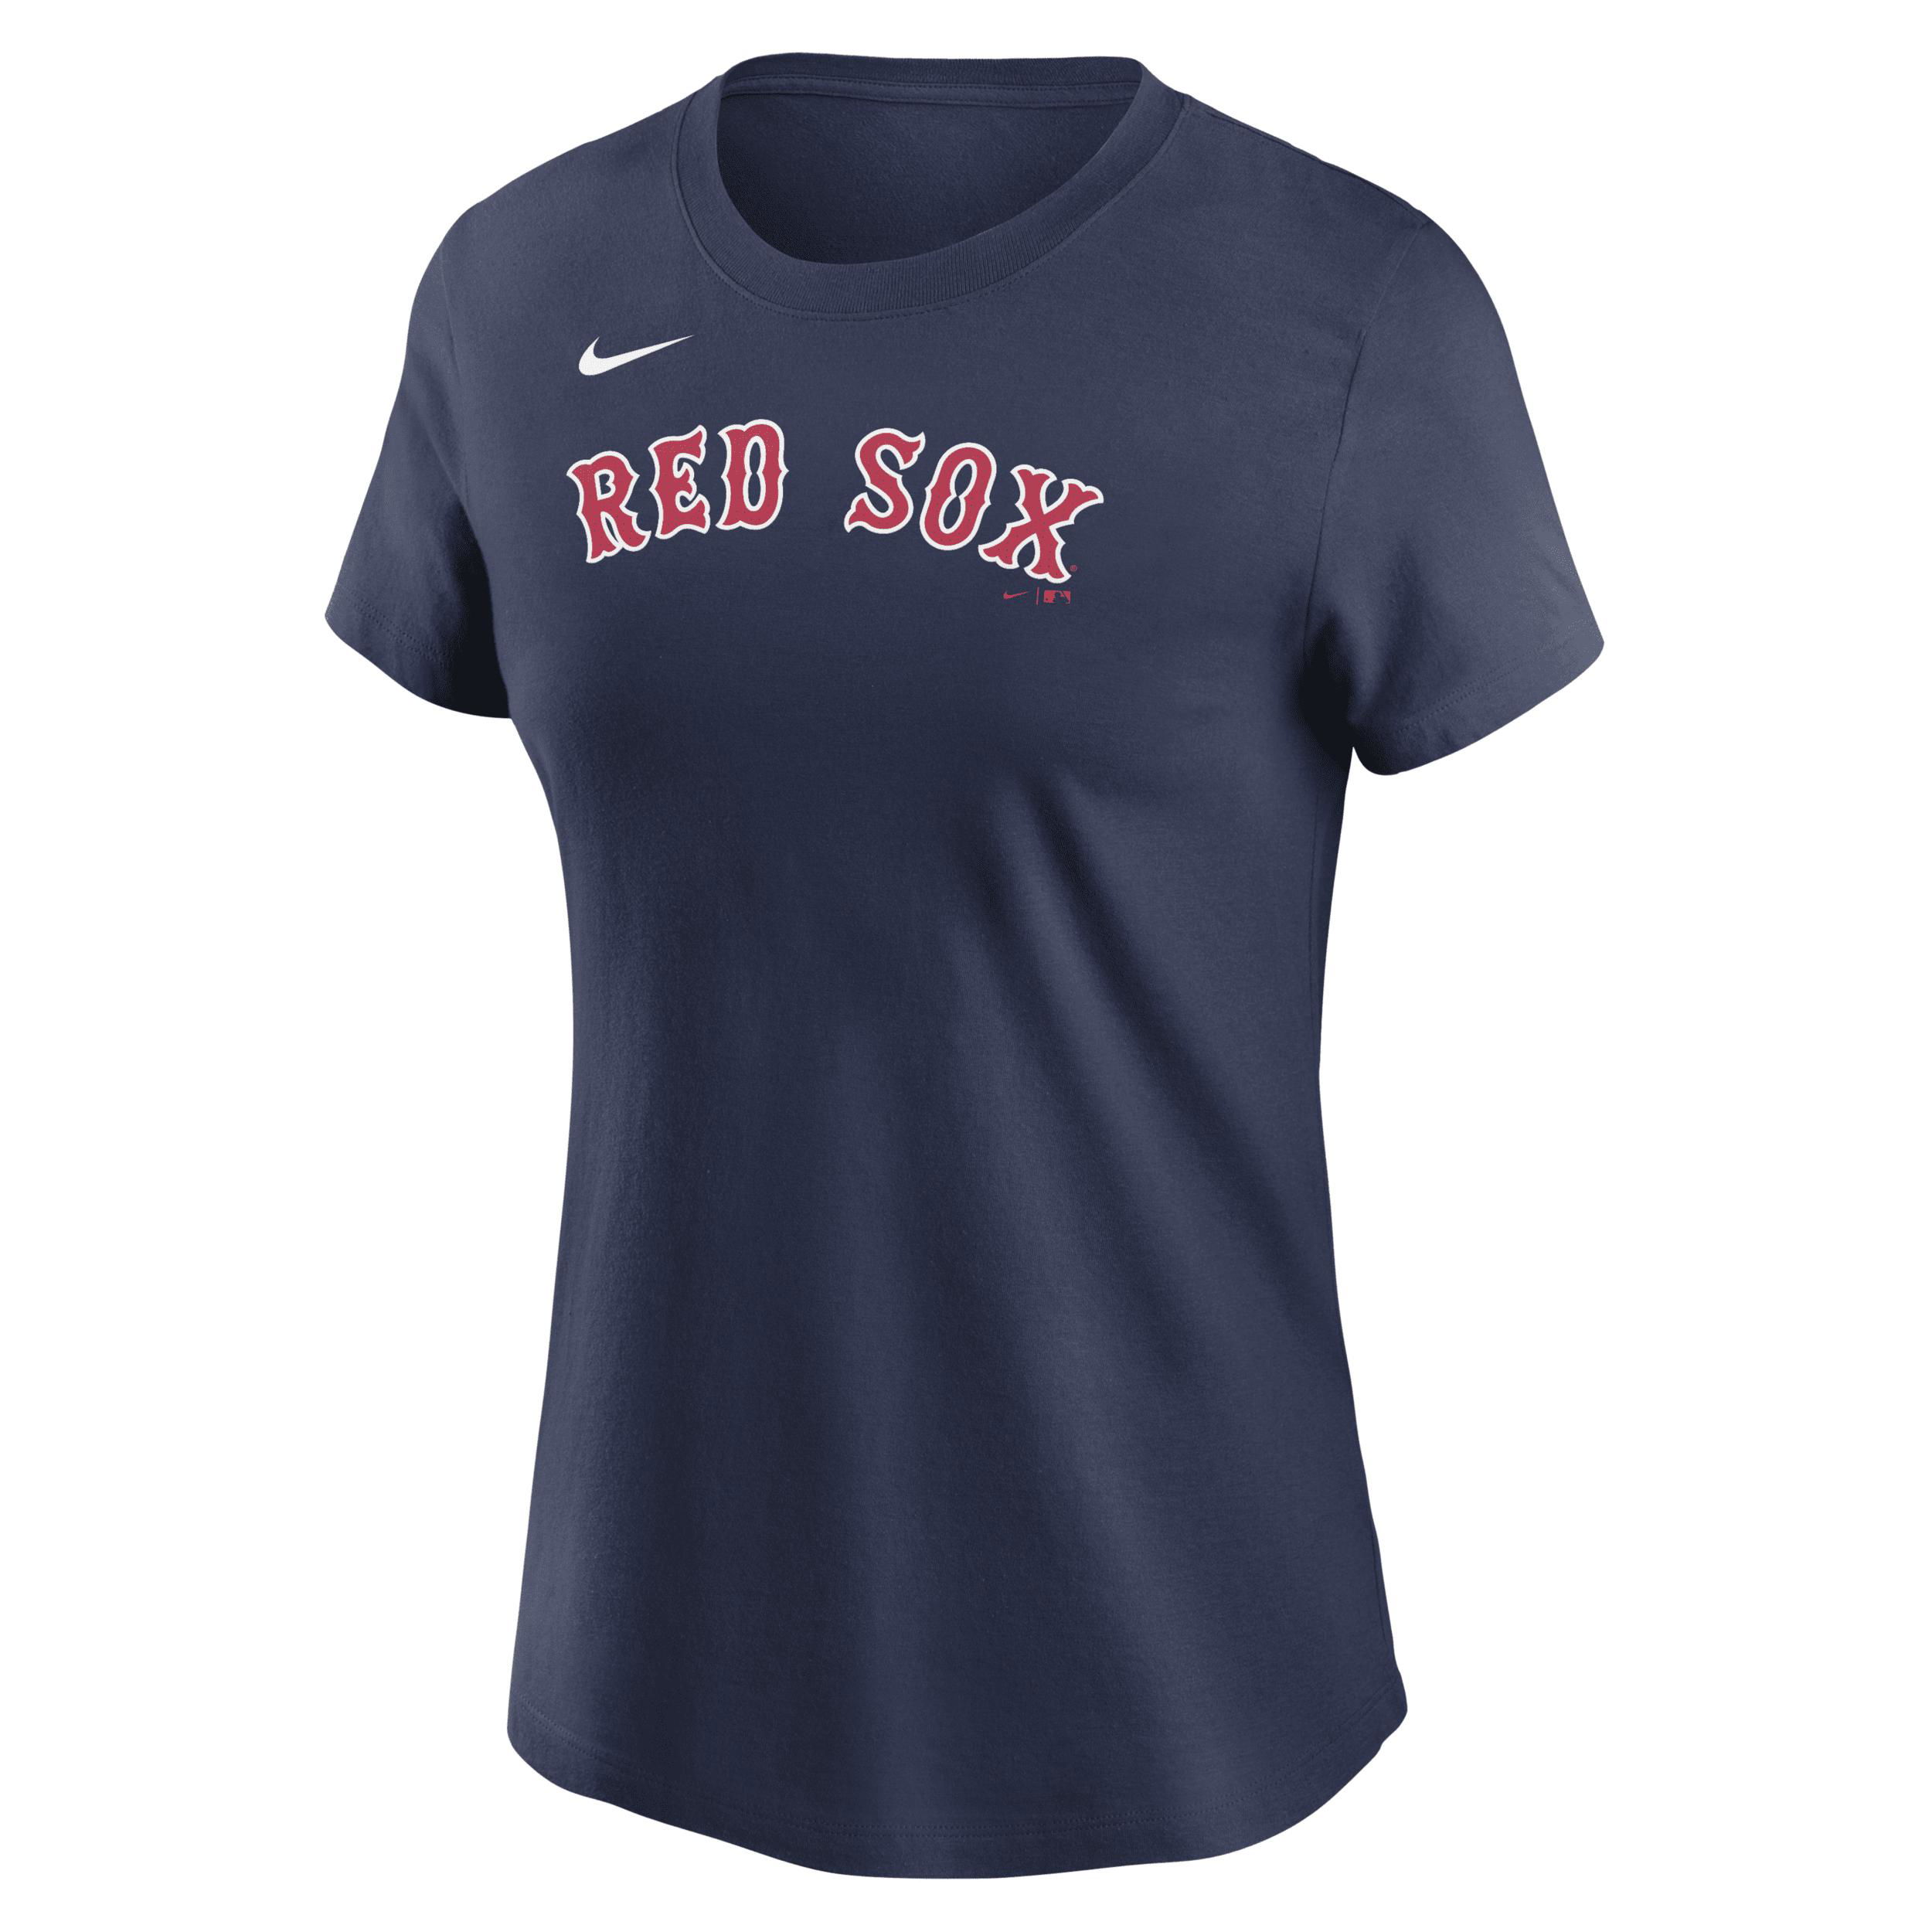 Boston Red Sox Wordmark Nike Women's MLB T-Shirt by NIKE